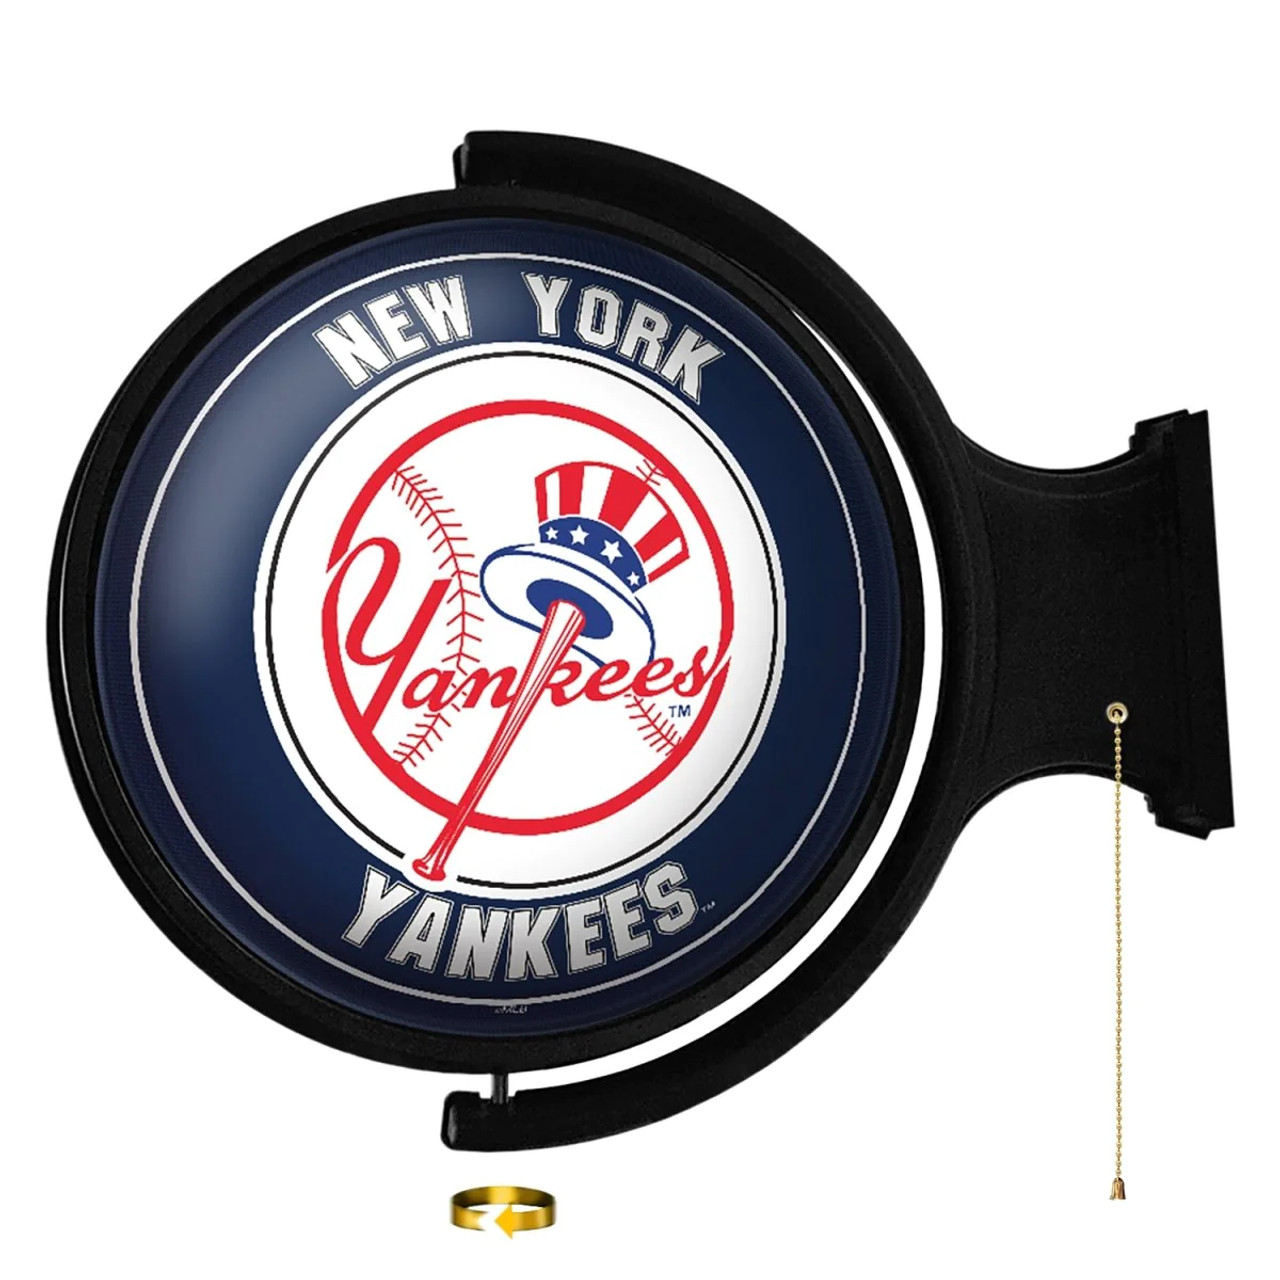 MBNYYS-115-01, New York, NY, NYY, Yanks, Yankees,  Original, Round, Rotating, Lighted, Wall, Sign, The Fan-Brand, 704384952459, LED